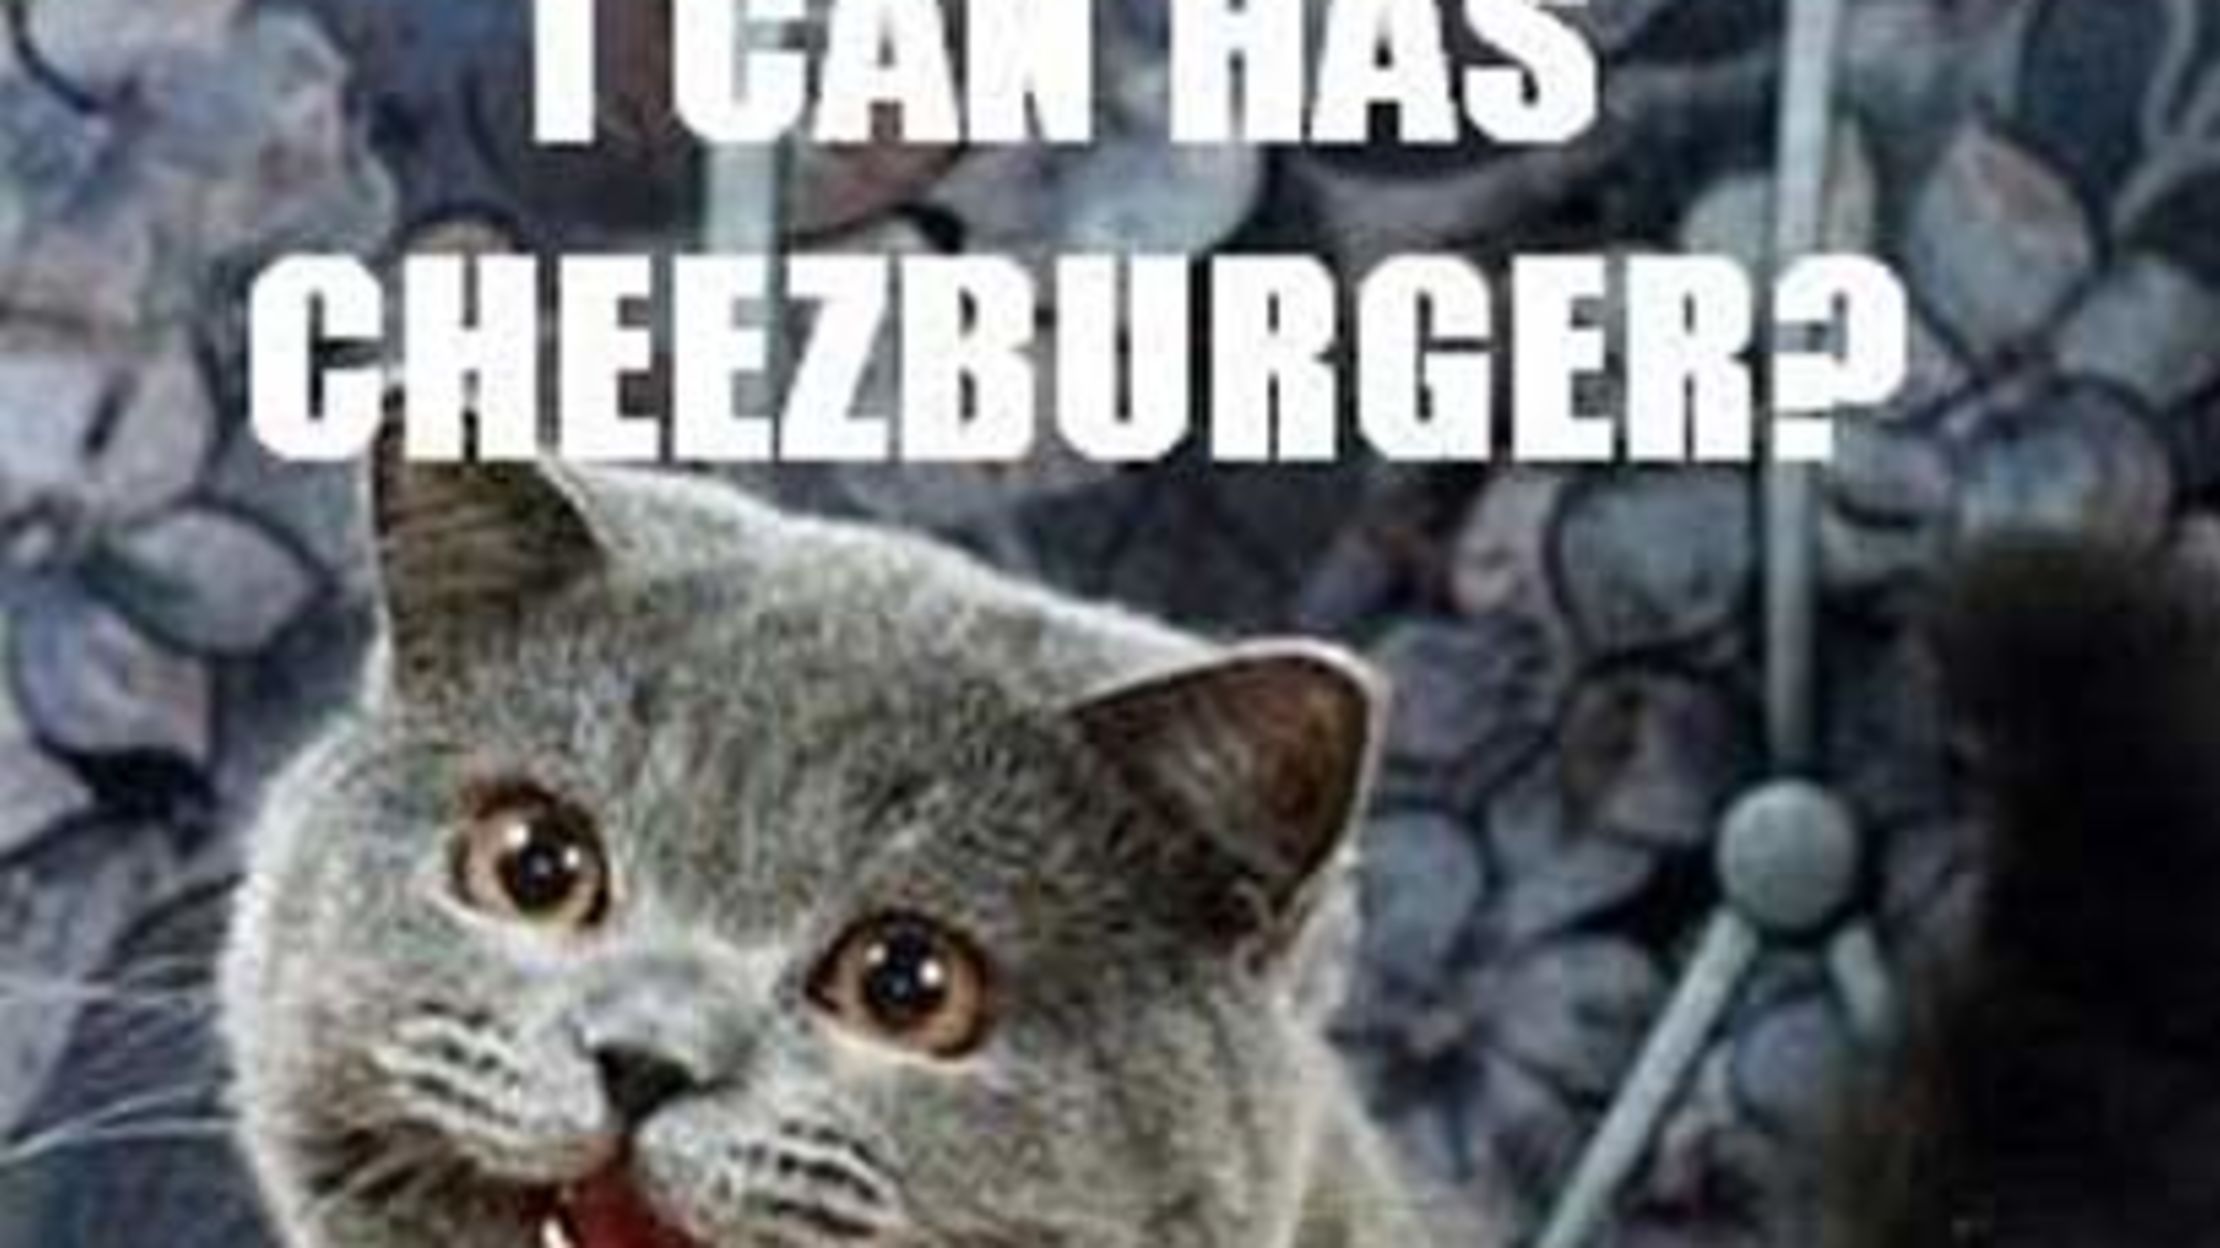 I can haz cheezburger feline crossword